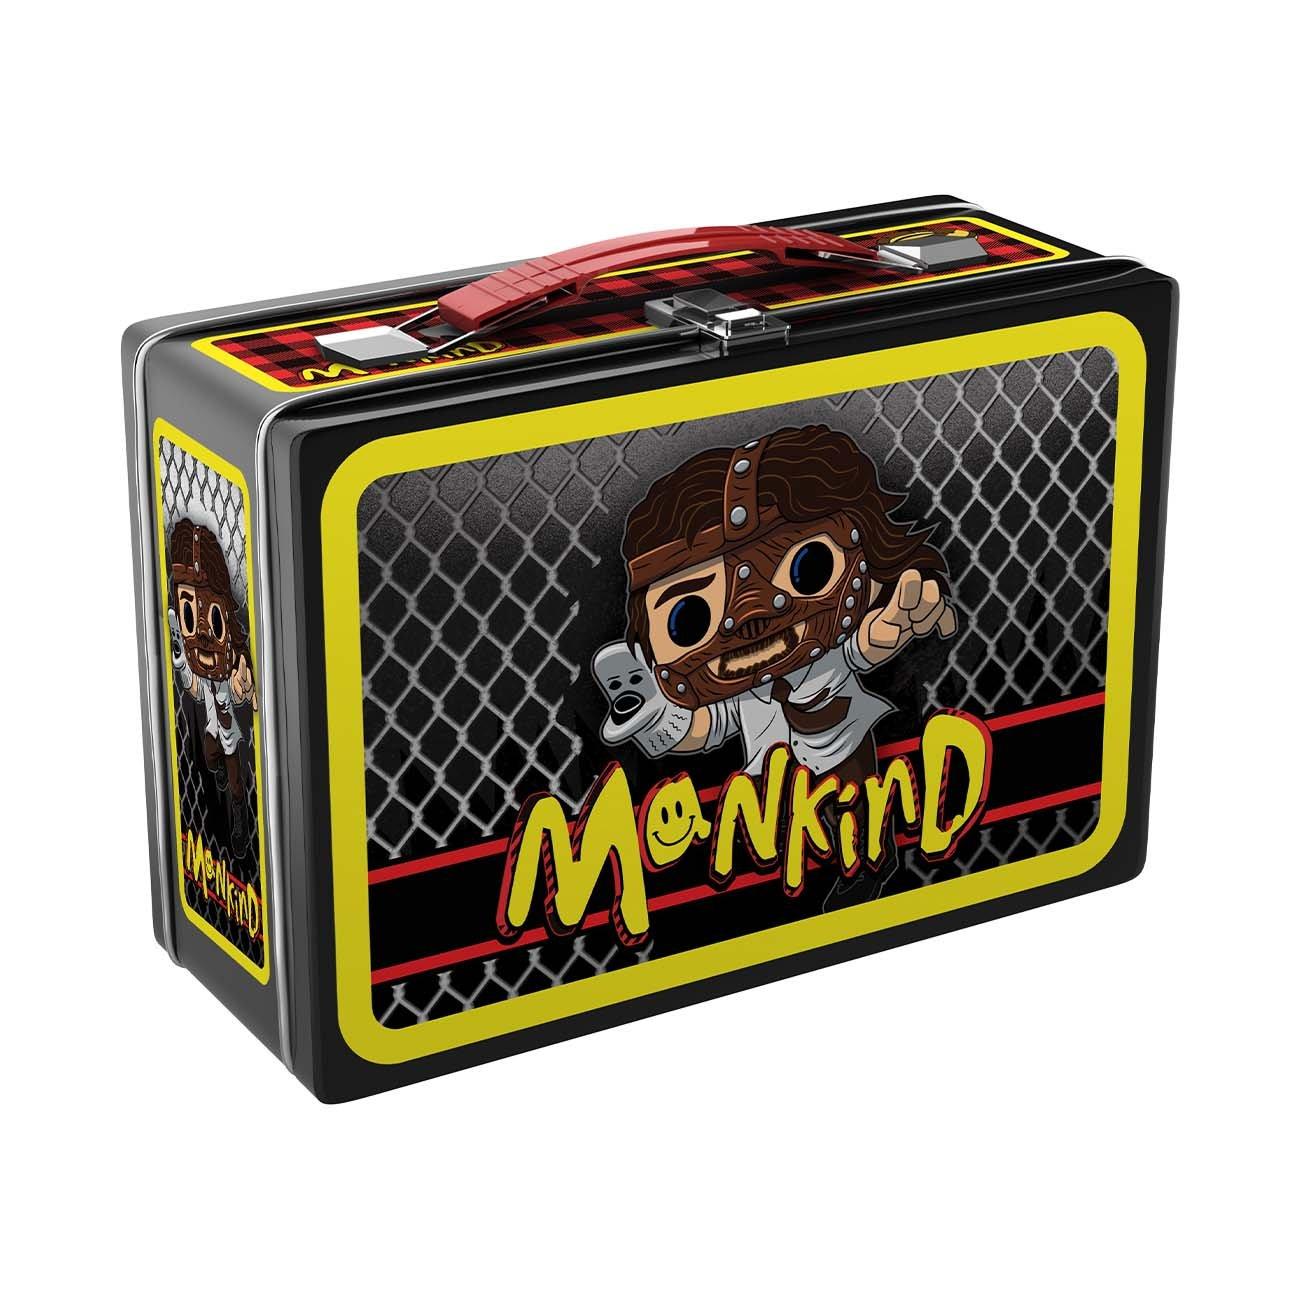 https://media.gamestop.com/i/gamestop/11156370_ALT01/Funko-WWE-Mankind-Collectors-Lunch-Box-and-Figure-Bundle-GameStop-Exclusive?$pdp$